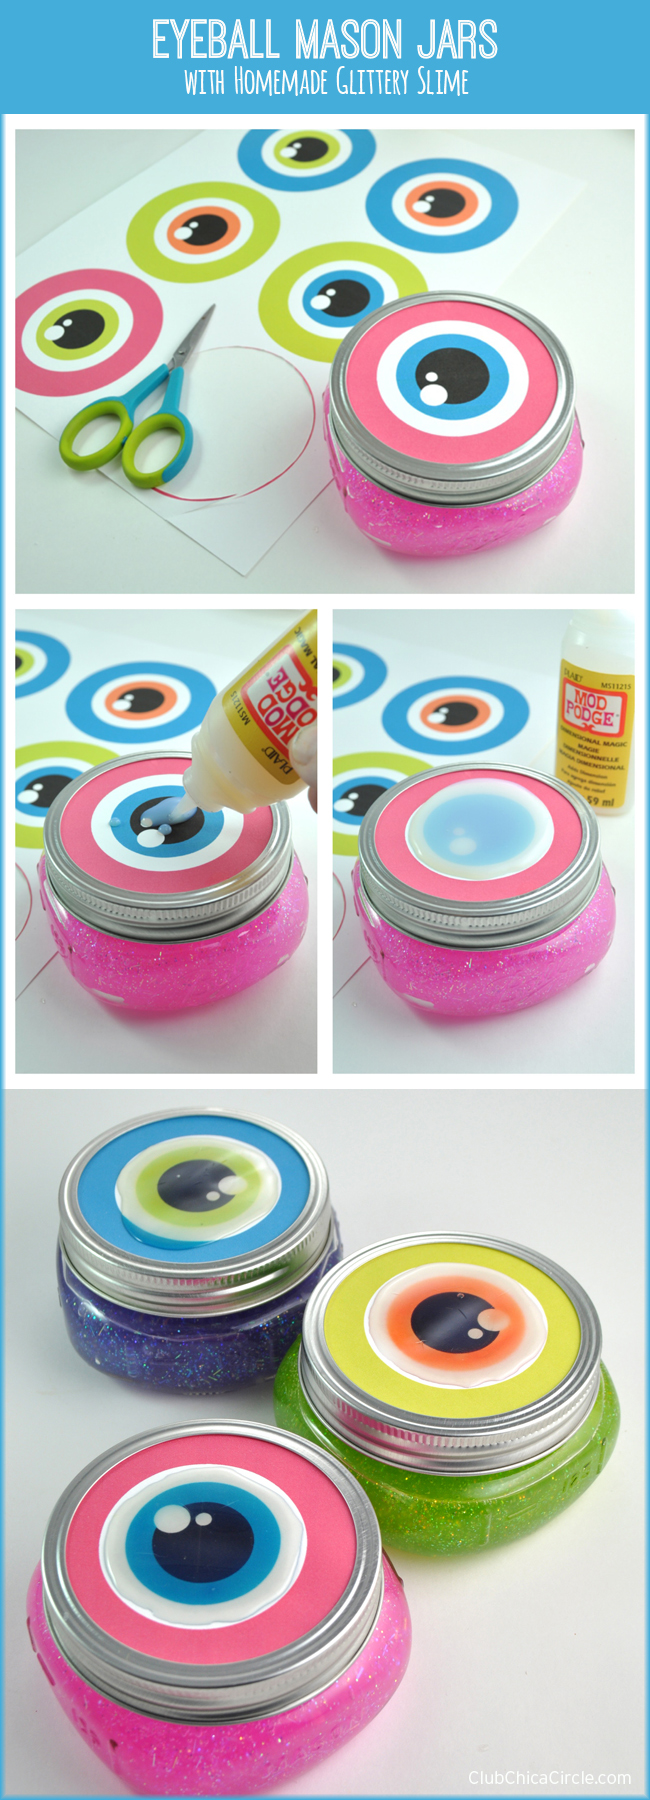 Eyeball Mason Jars Craft Idea with Homemade Glitter Slime